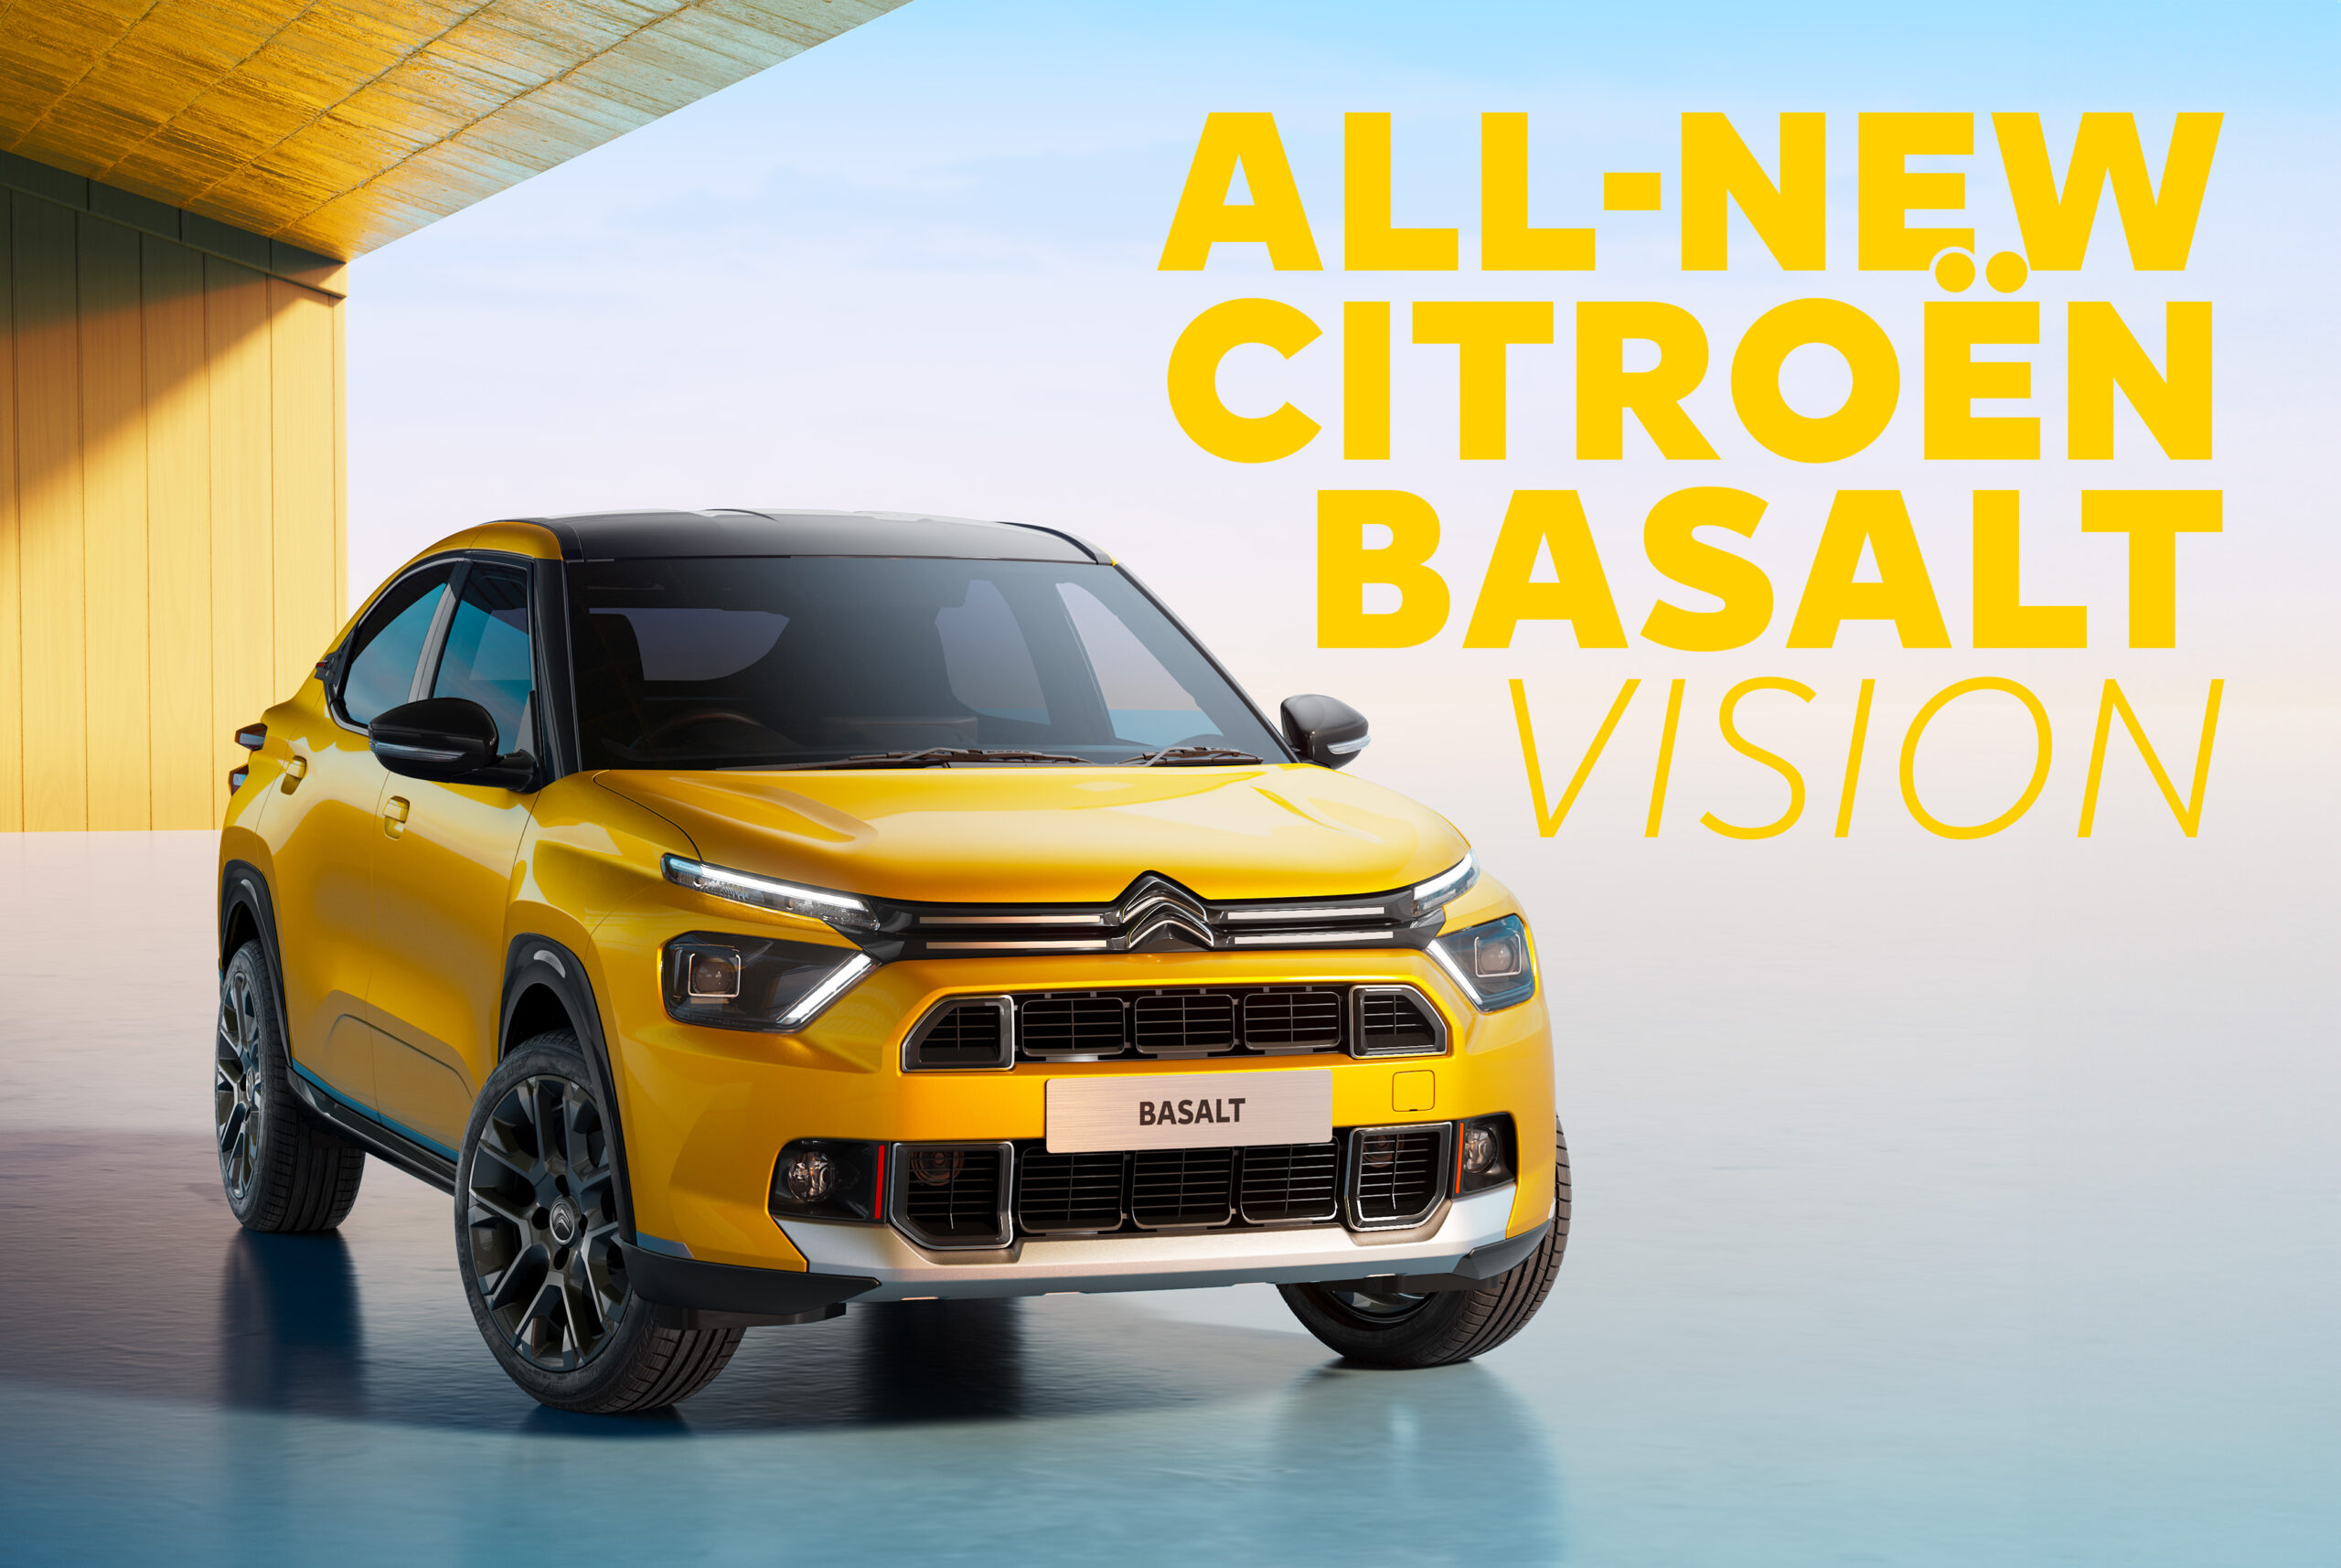 Citroën Basalt Vision Is Tata Curvv And Hyundai Creta Rival